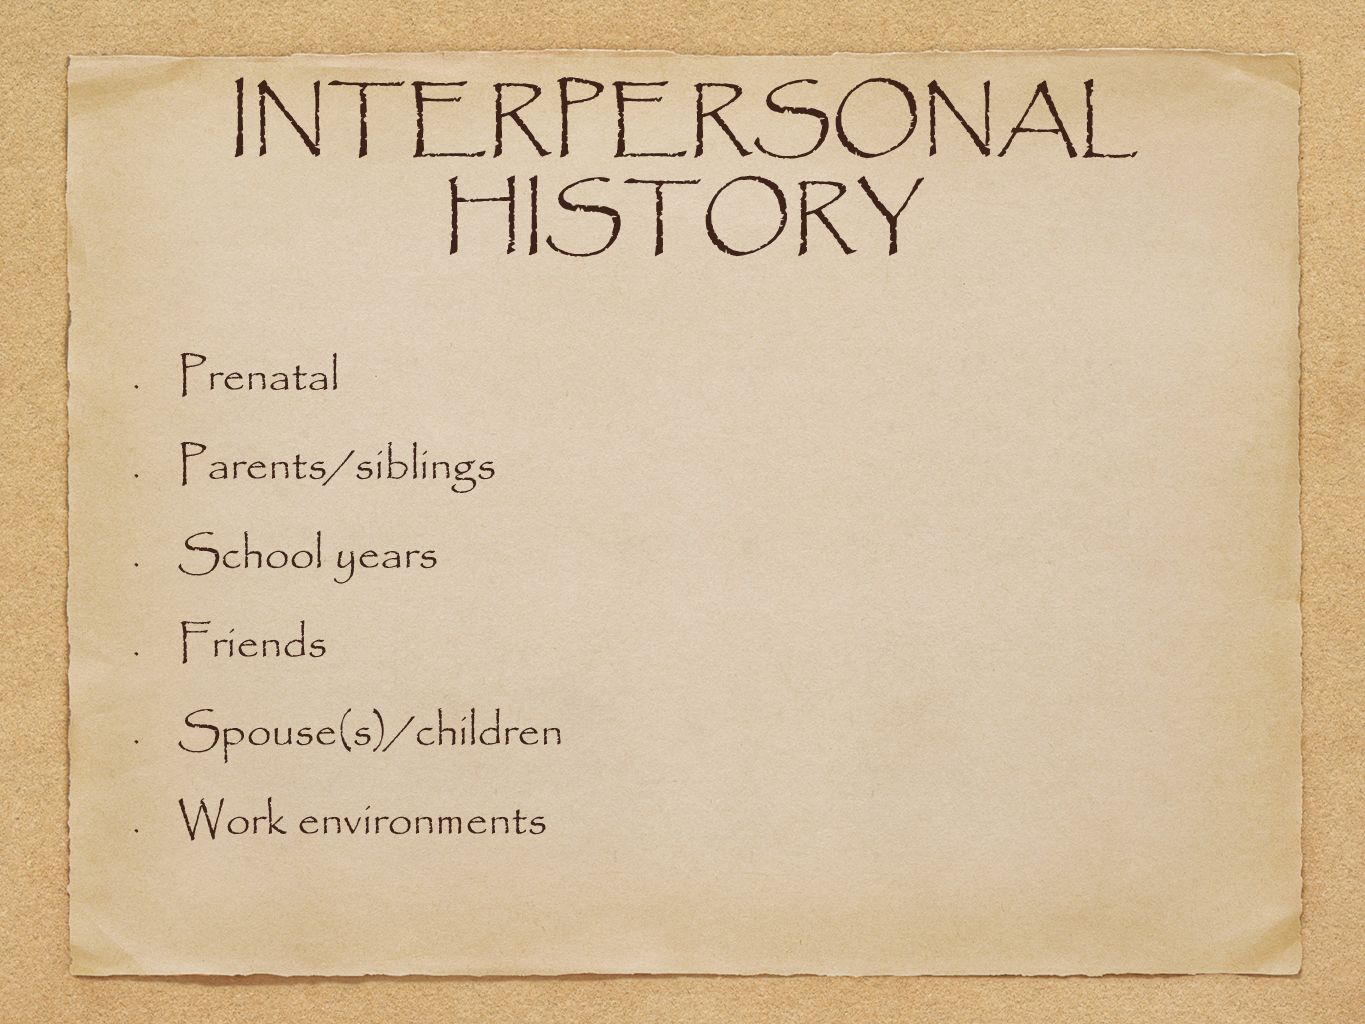 INTERPERSONAL HISTORY Prenatal Parents/siblings School years Friends Spouse(s)/children Work environments